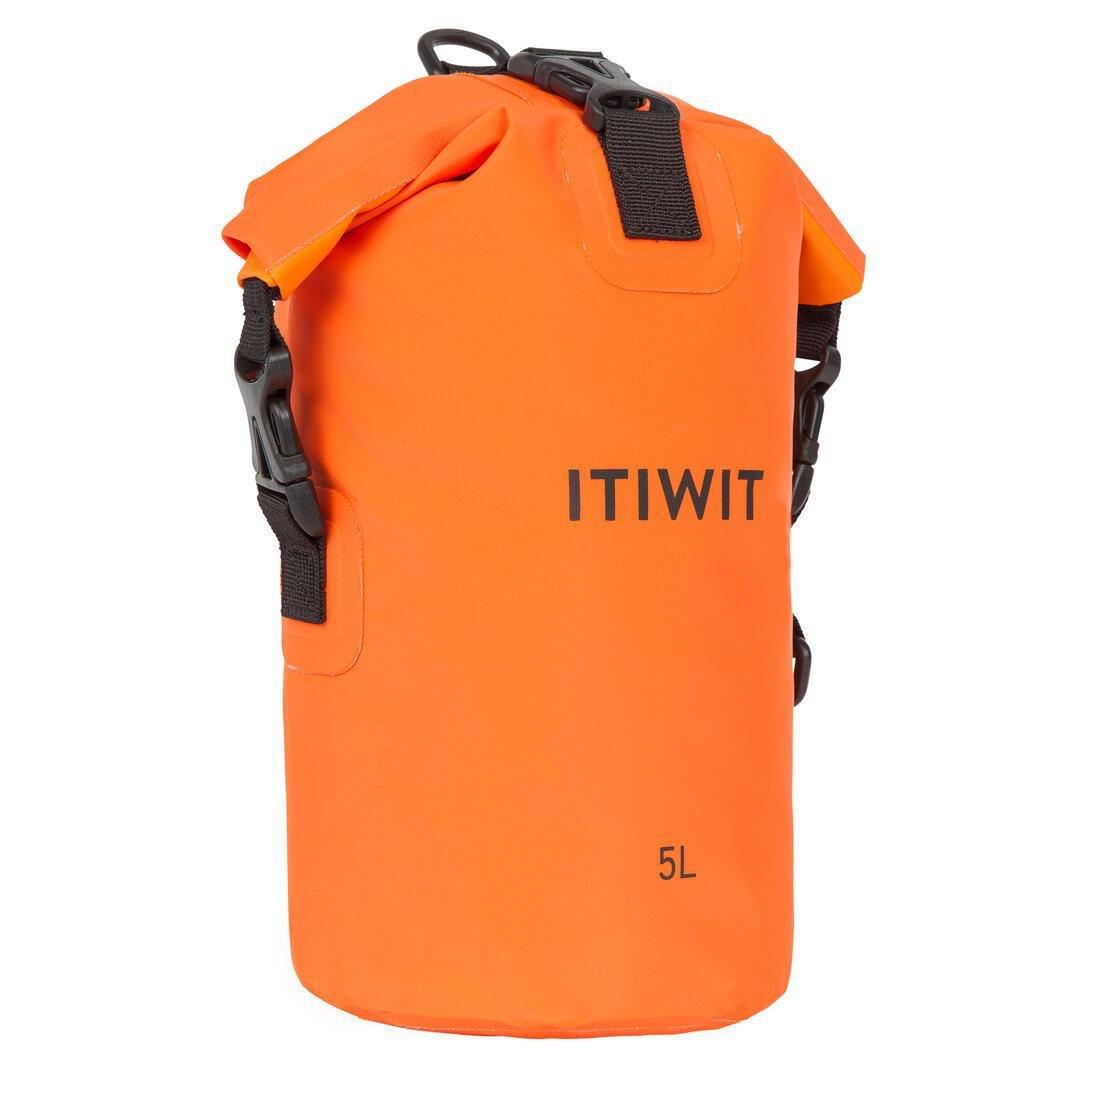 ITIWIT - WATERPROOF DRY BAG 5L, Blood orange